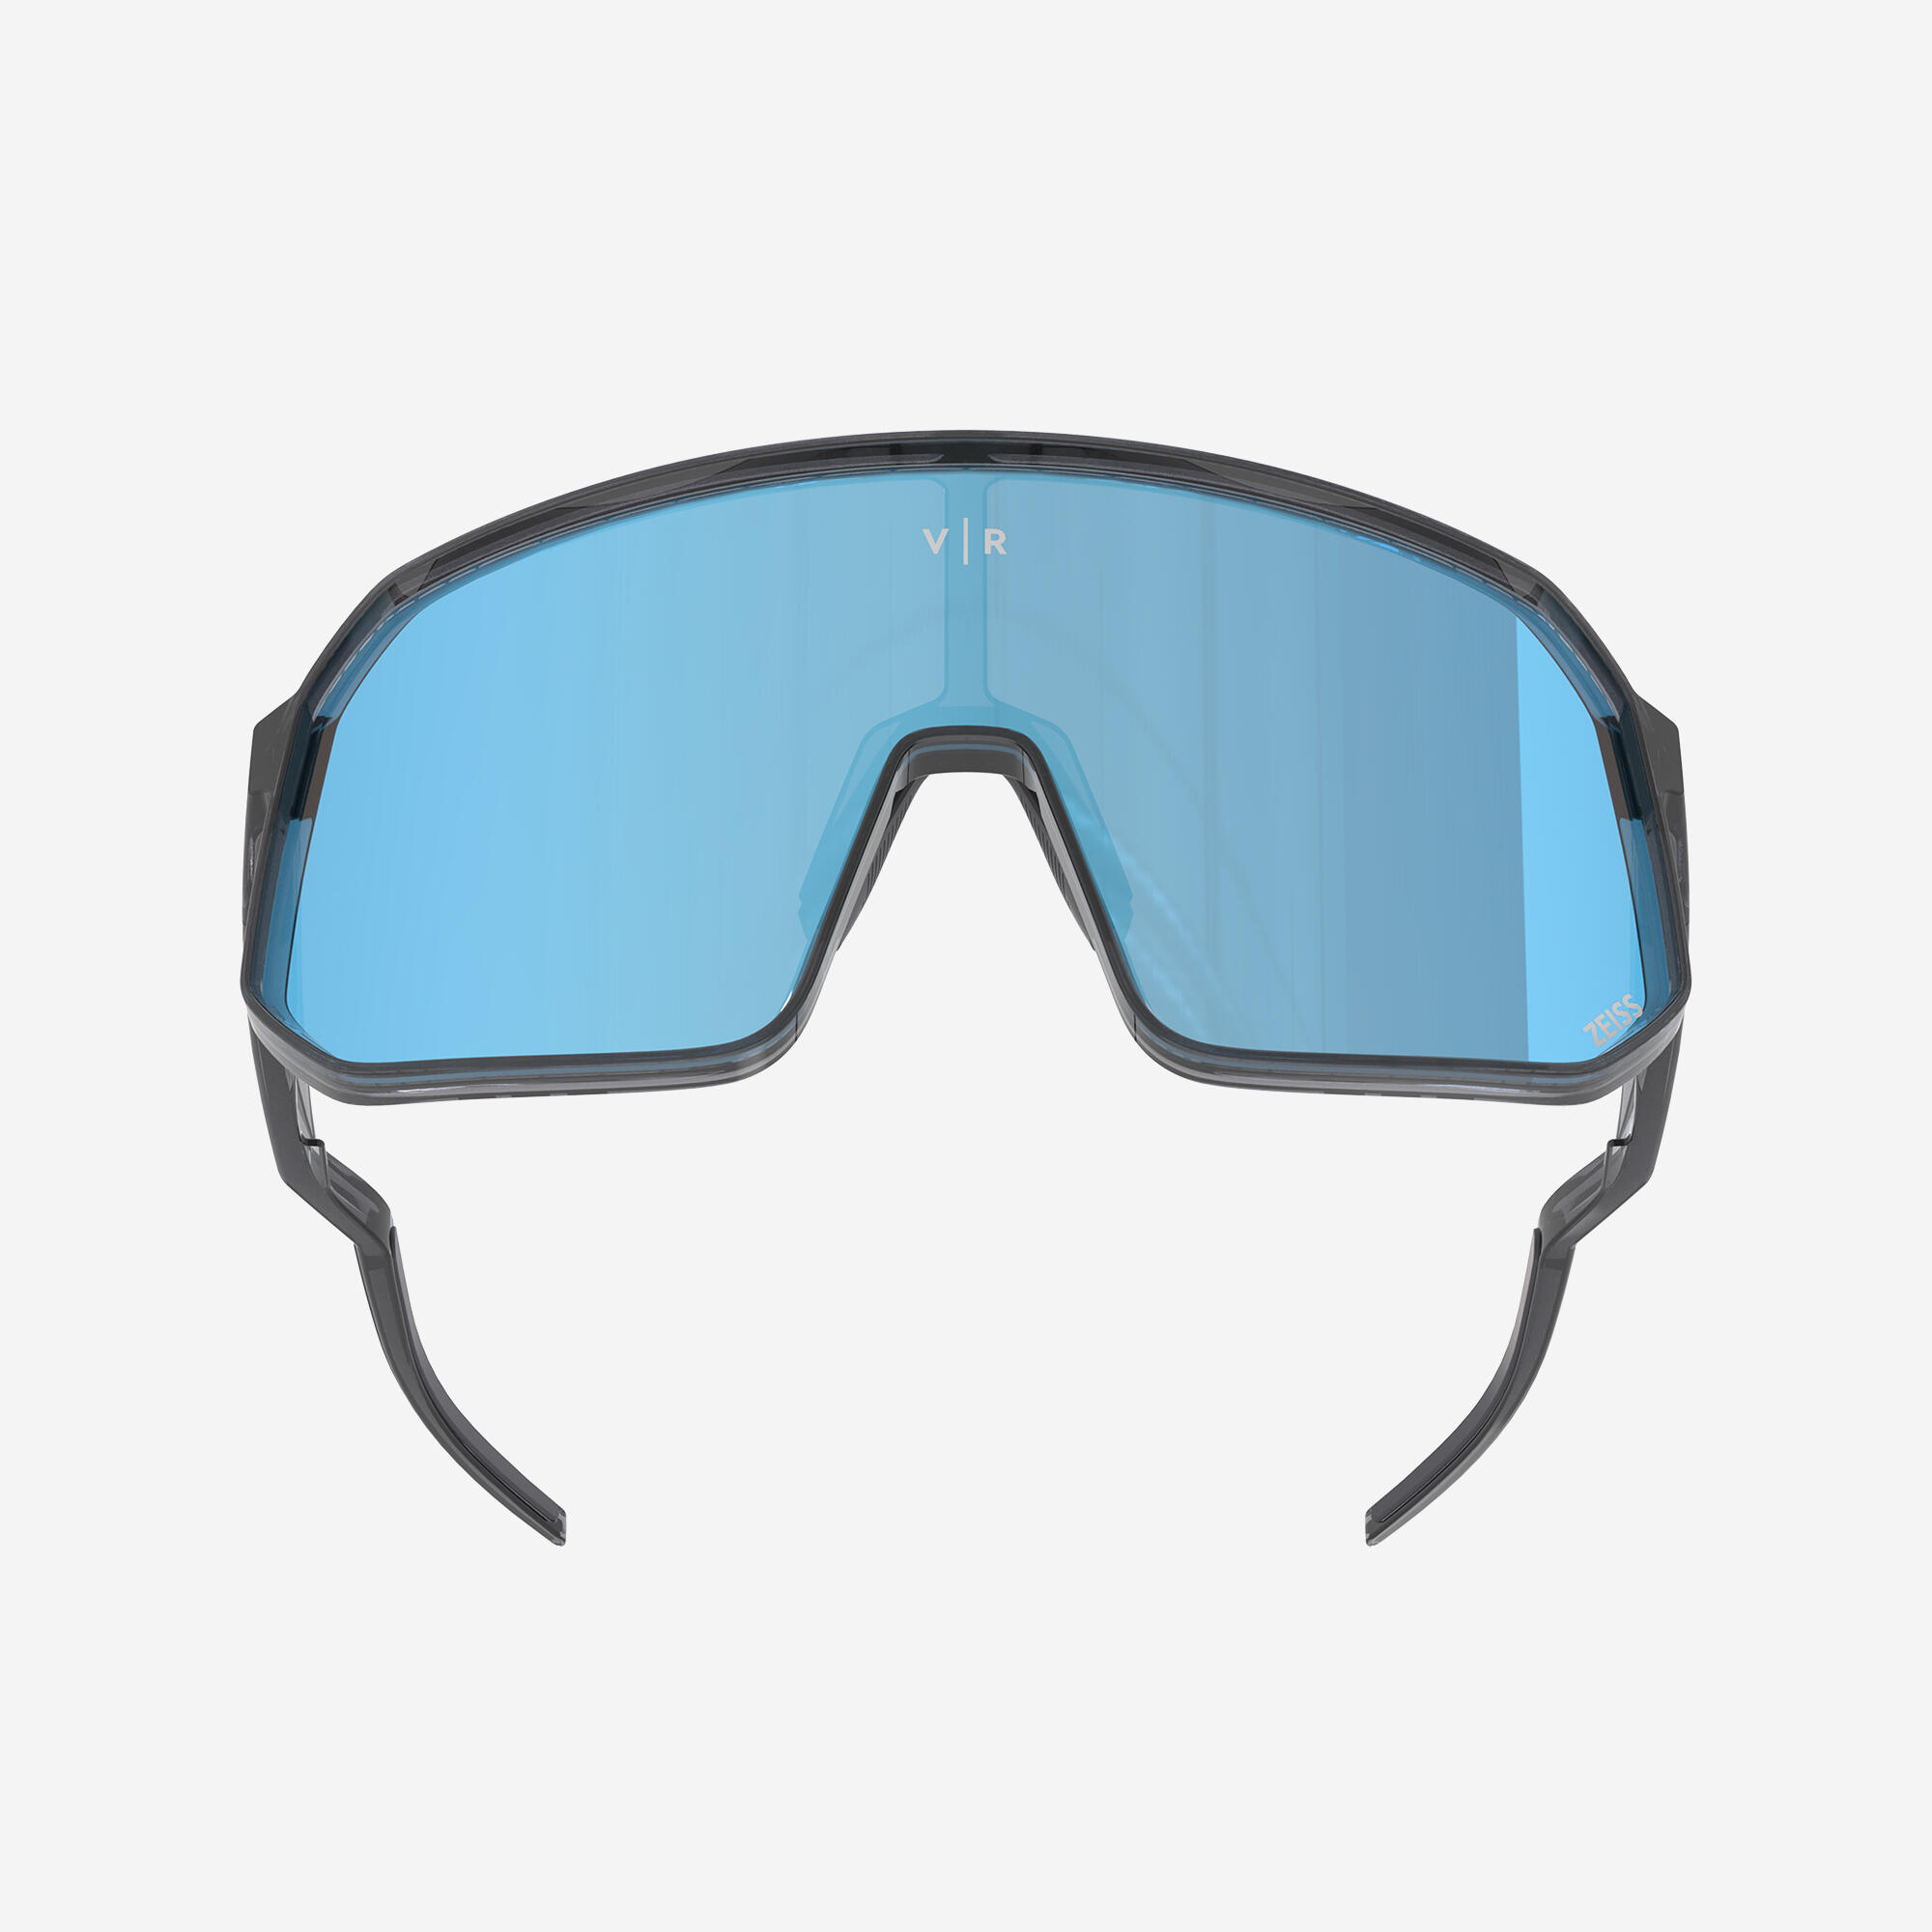 Sunglasses RoadR 900 Perf Light Pack - Grey / Translucent 2/6